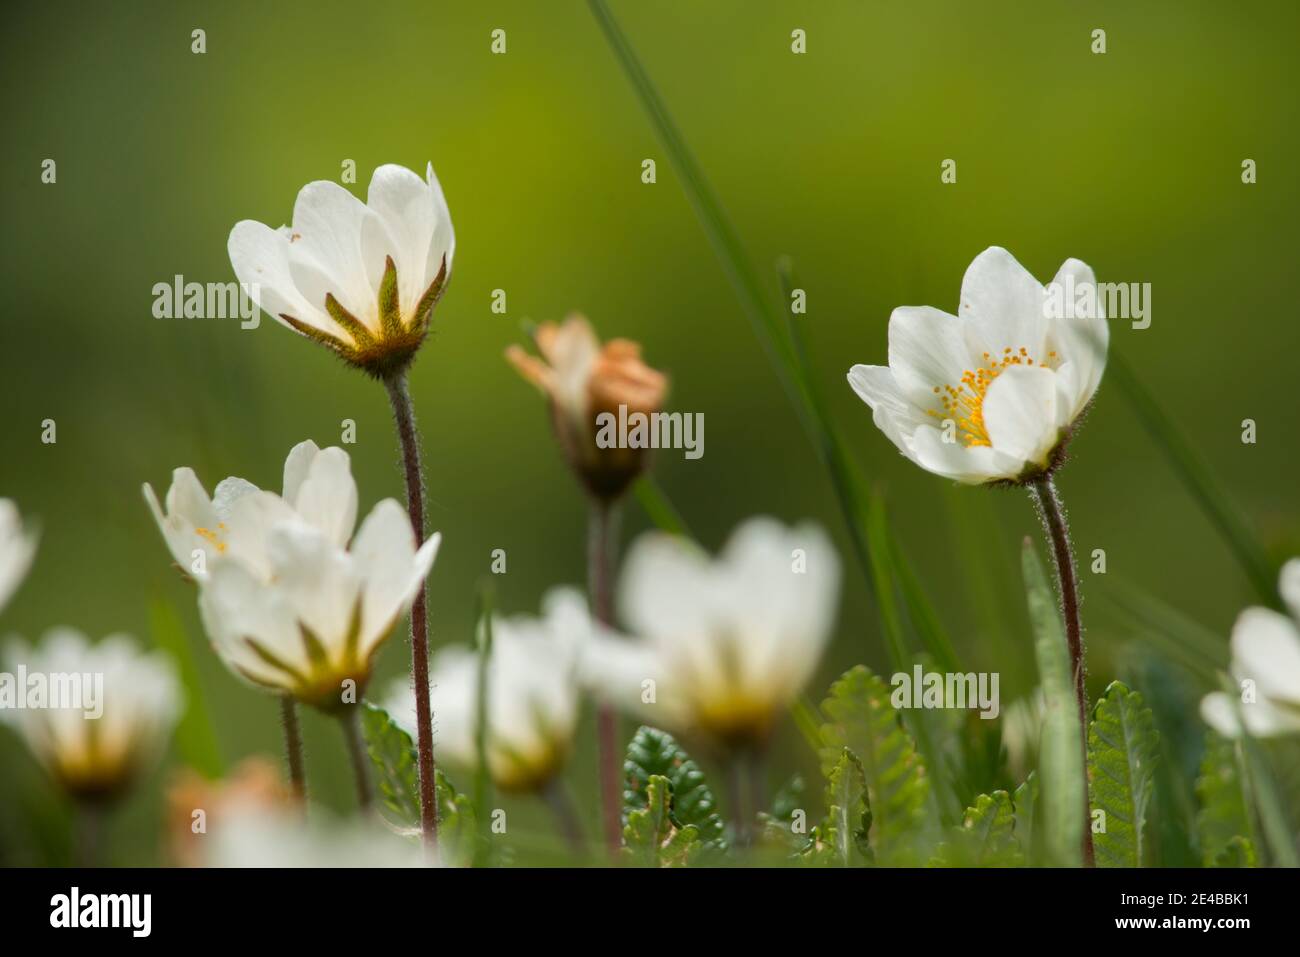 Alpine buttercup, white anemone-like flowers Stock Photo